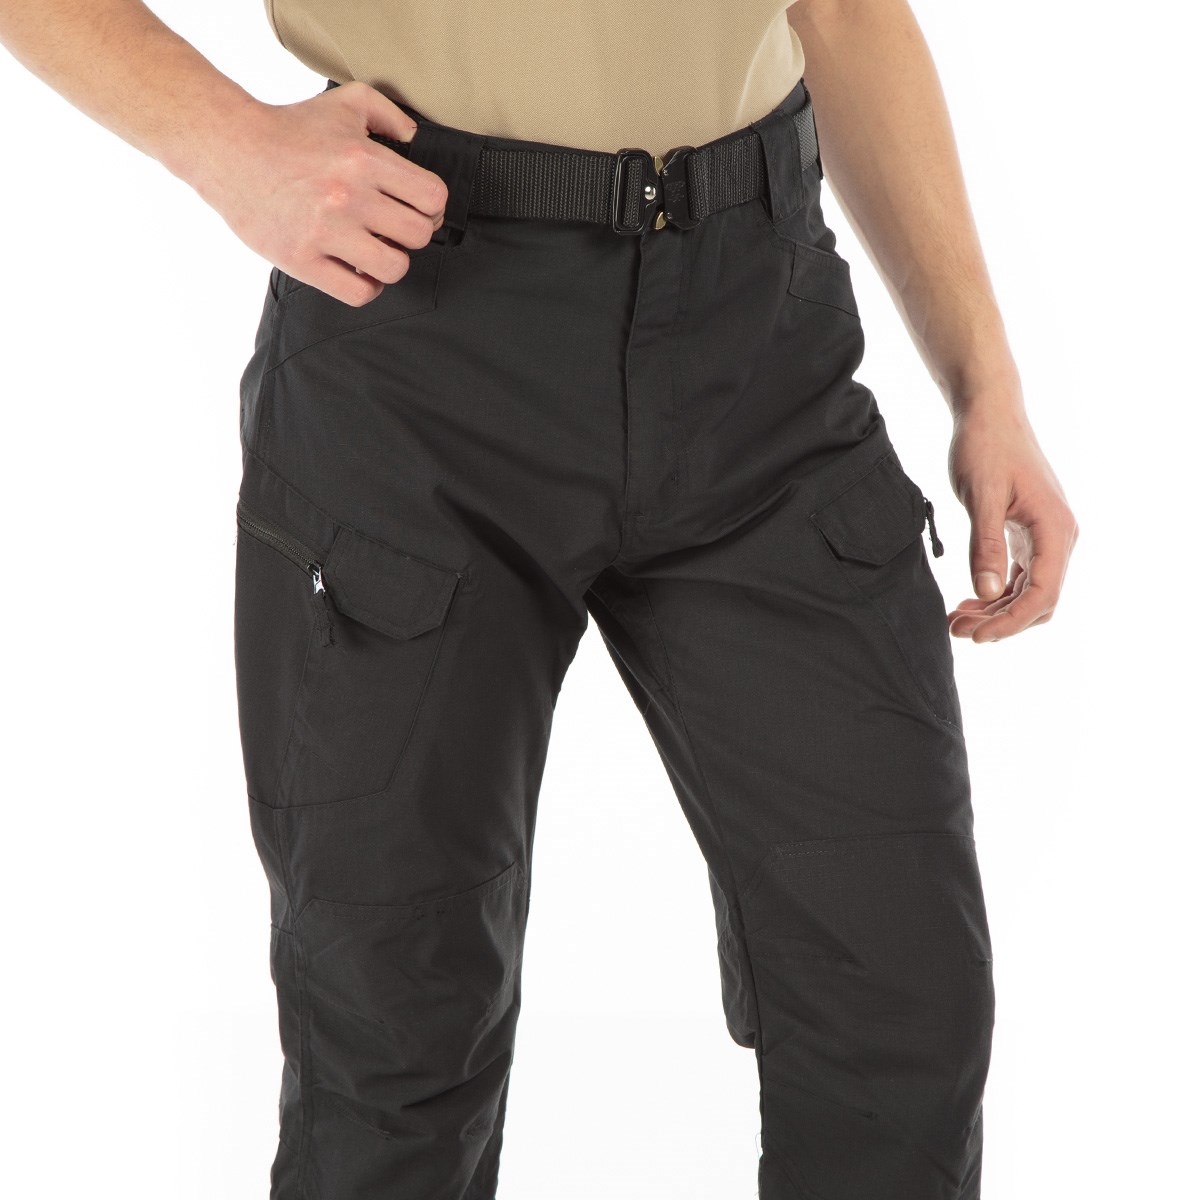 5.11 Modeli Outdoor Taktik Pantolon Siyah-V2 - Polis Sepeti